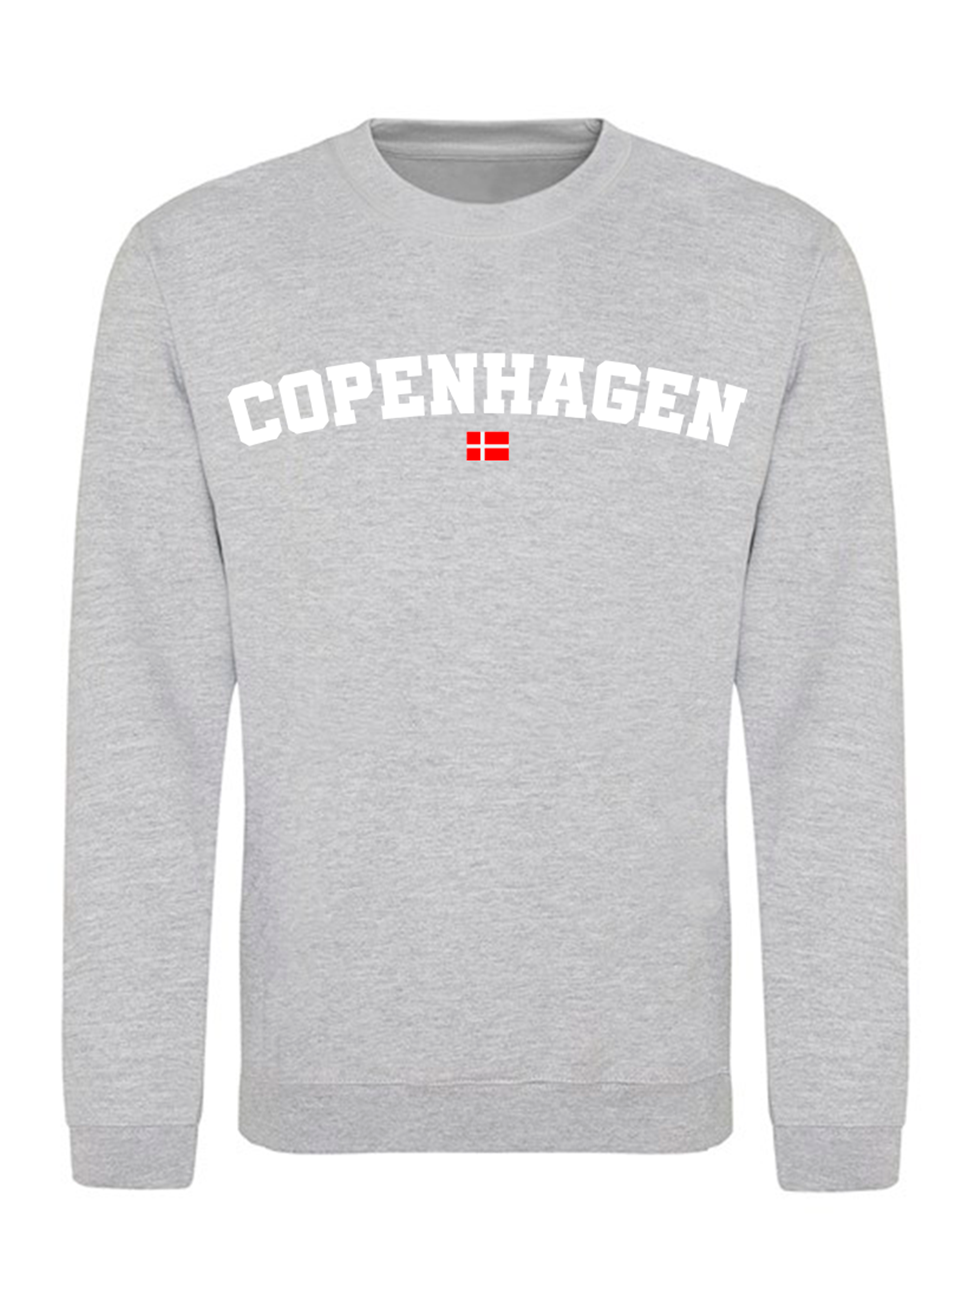 Copenhagen - Grå Sweatshirt